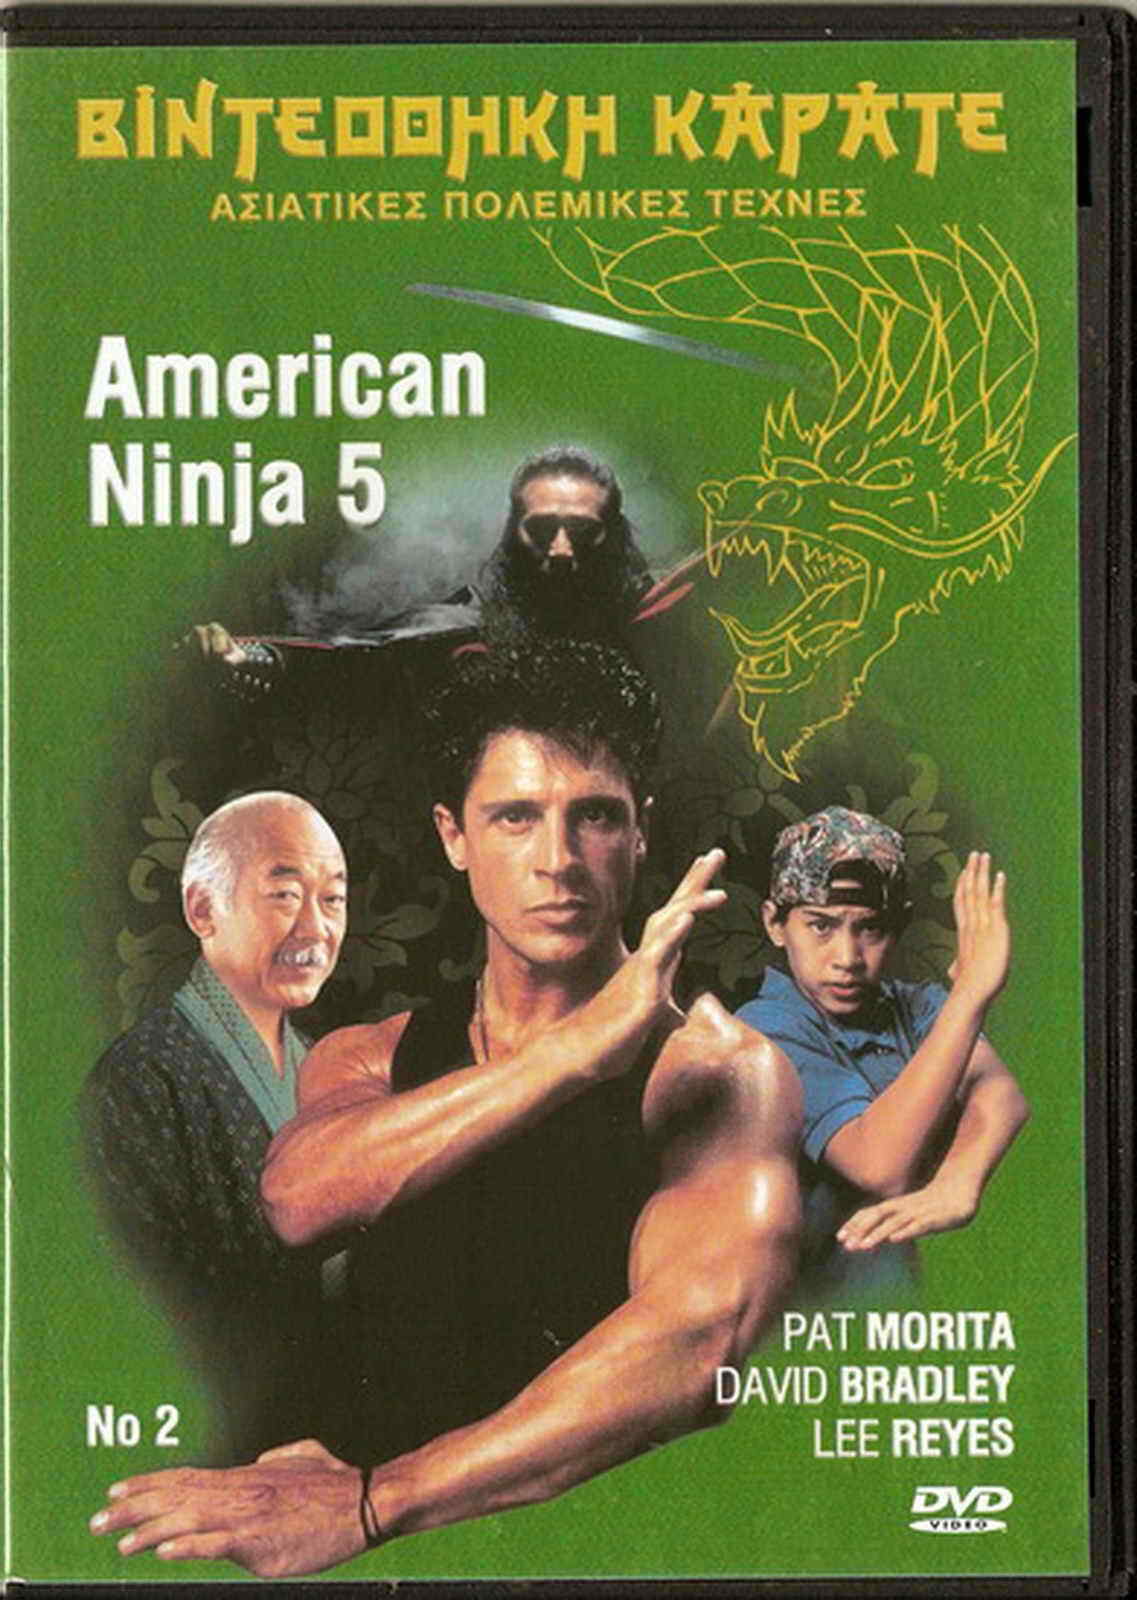 AMERICAN NINJA 5 (Pat Morita, David Bradley, Lee Reyes) Region 2 DVD | eBay